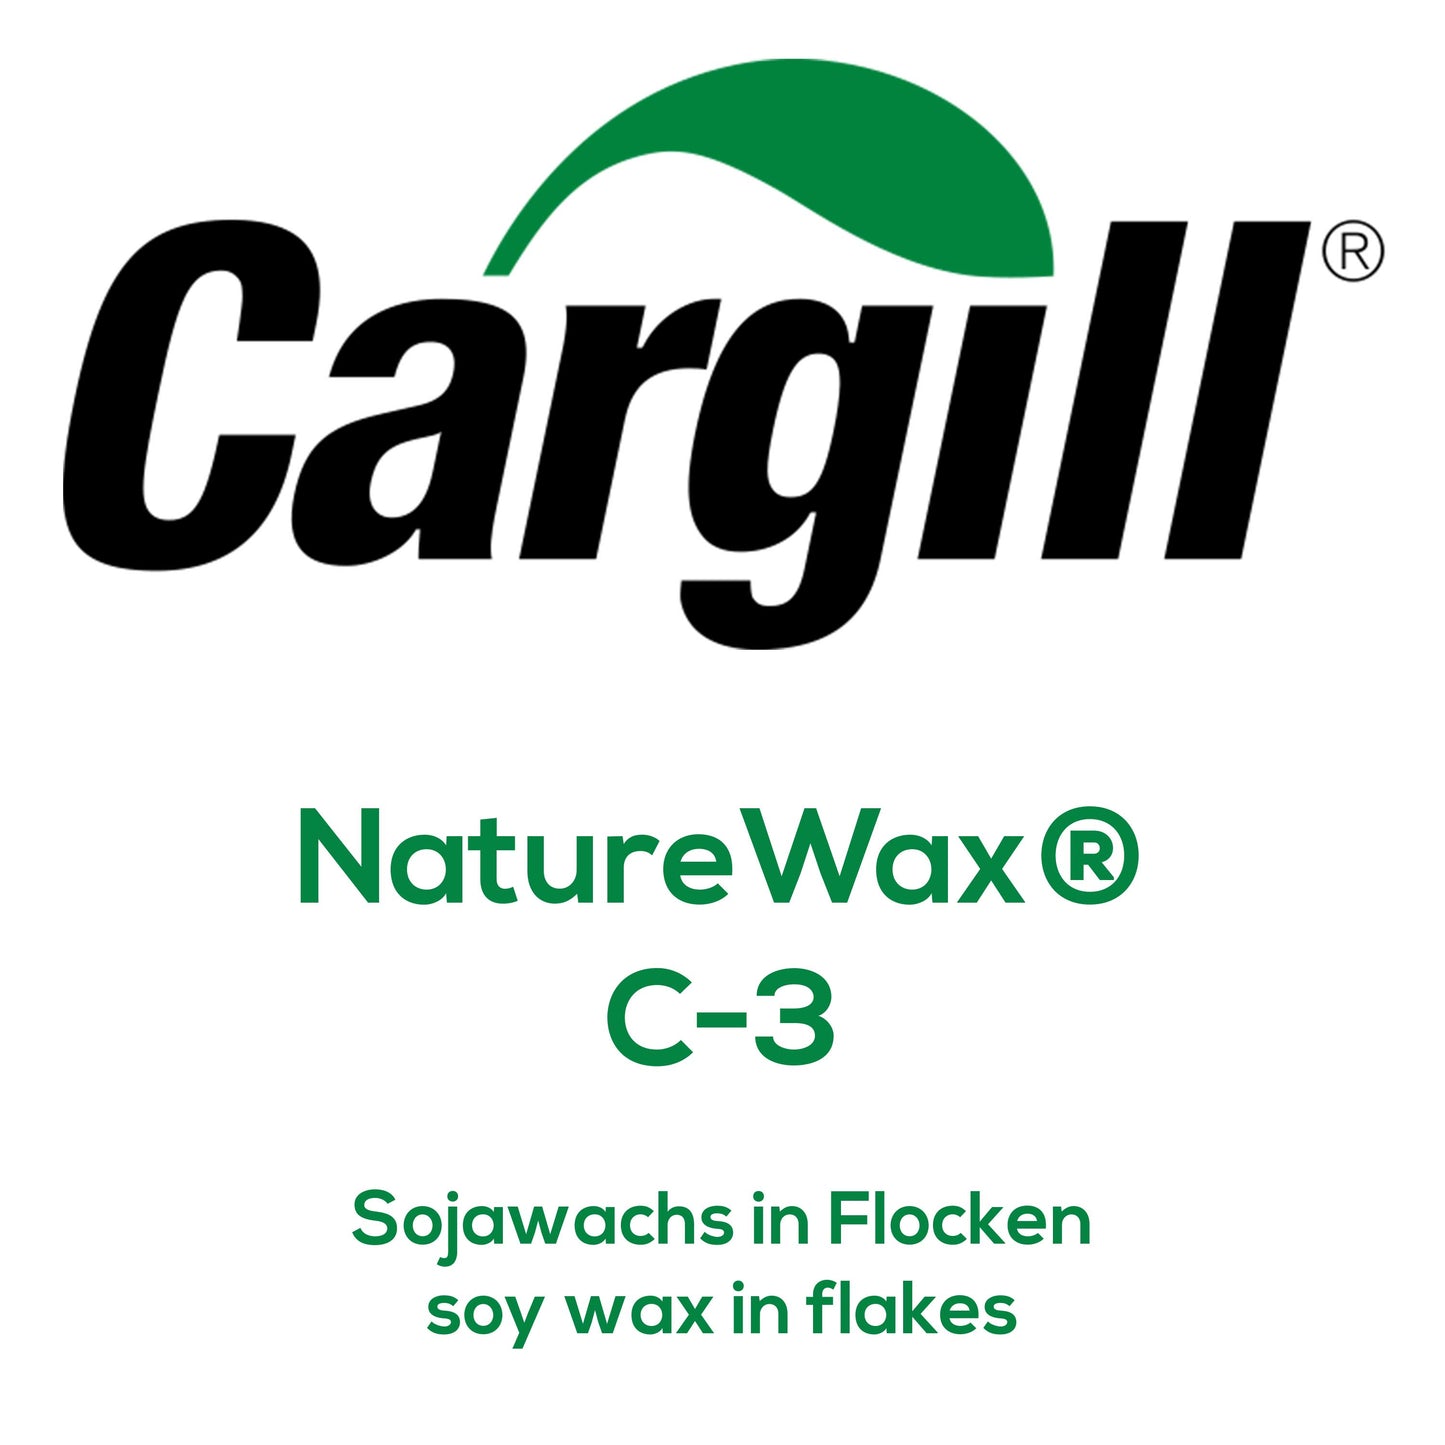 Cargill NatureWax® C-3 Sojawachs in Flocken, soy wax in flakes, C3